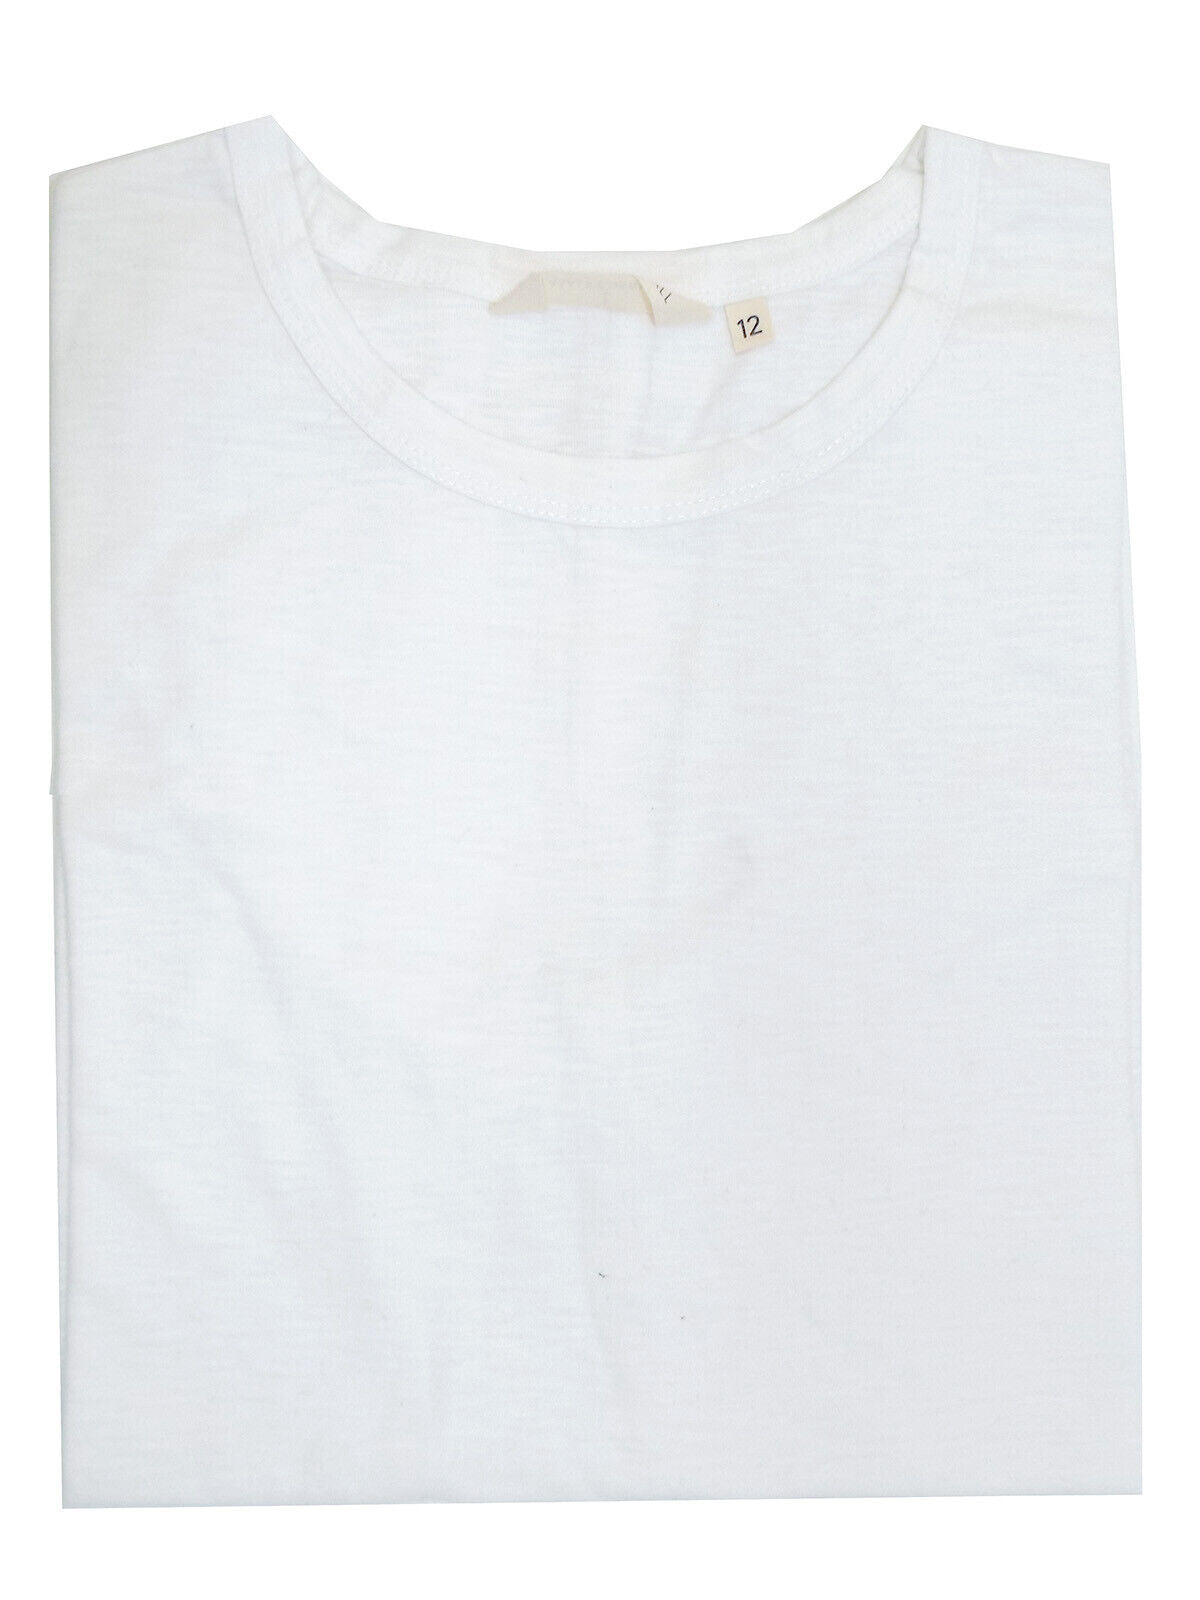 EX SEASALT White Salt Reflection T-Shirt Sizes 12, 14, 16, 18, 20, 22 £22.95